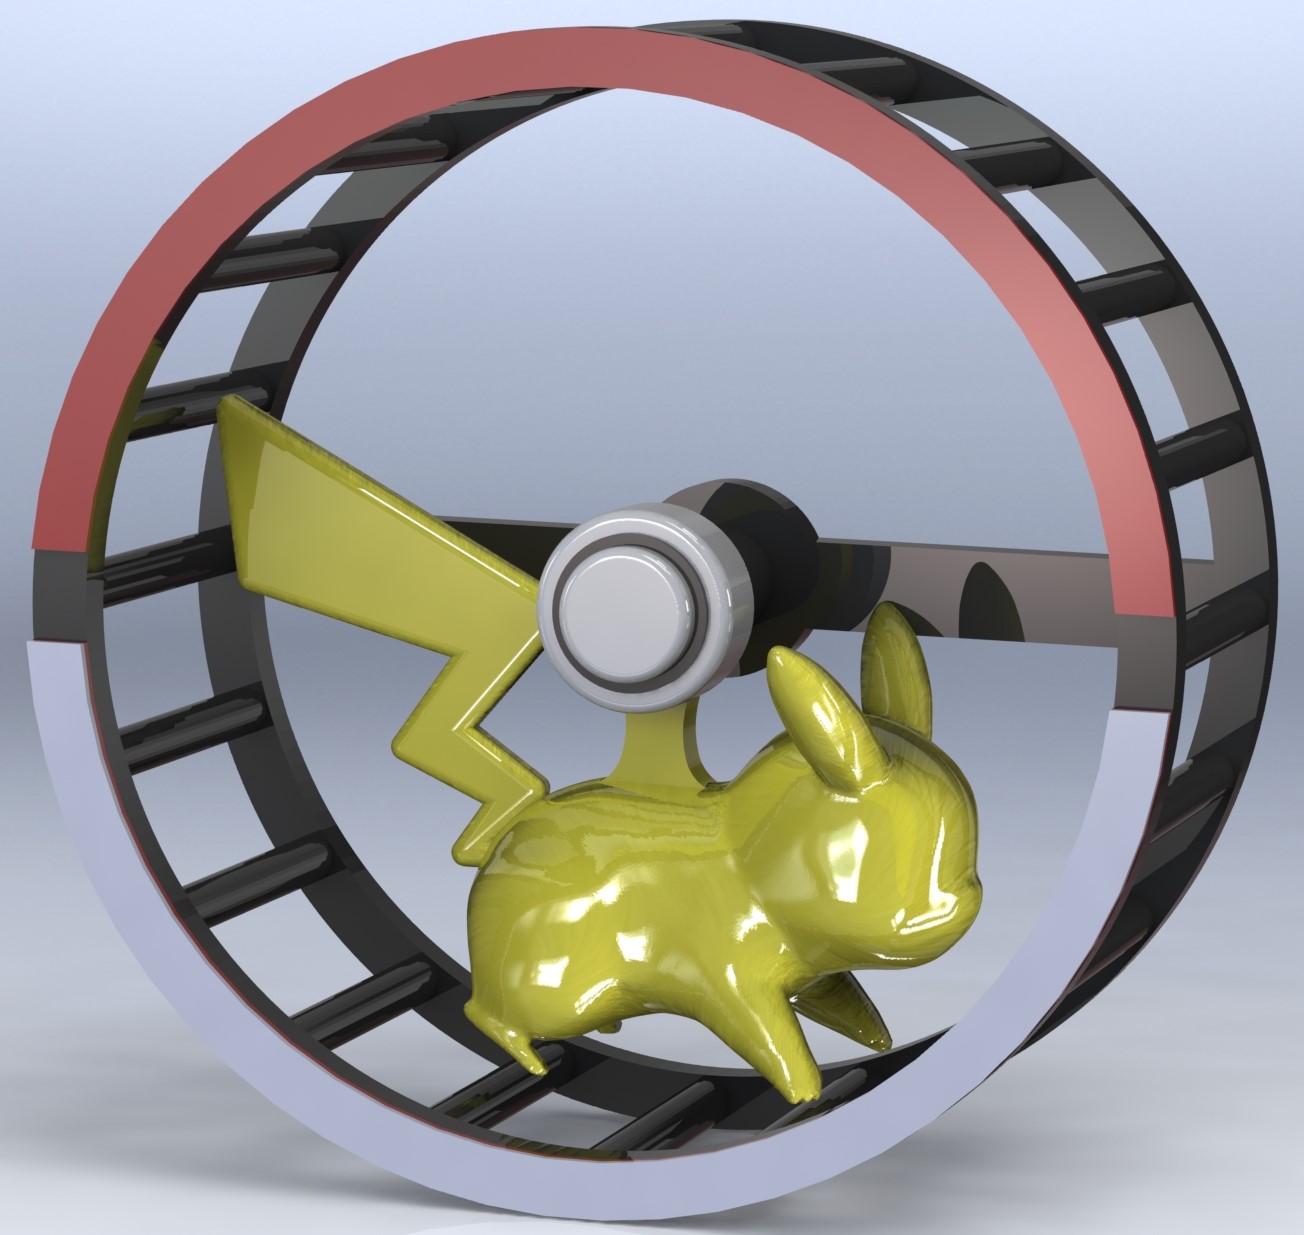 Pikachu Motor Rotation Indicator